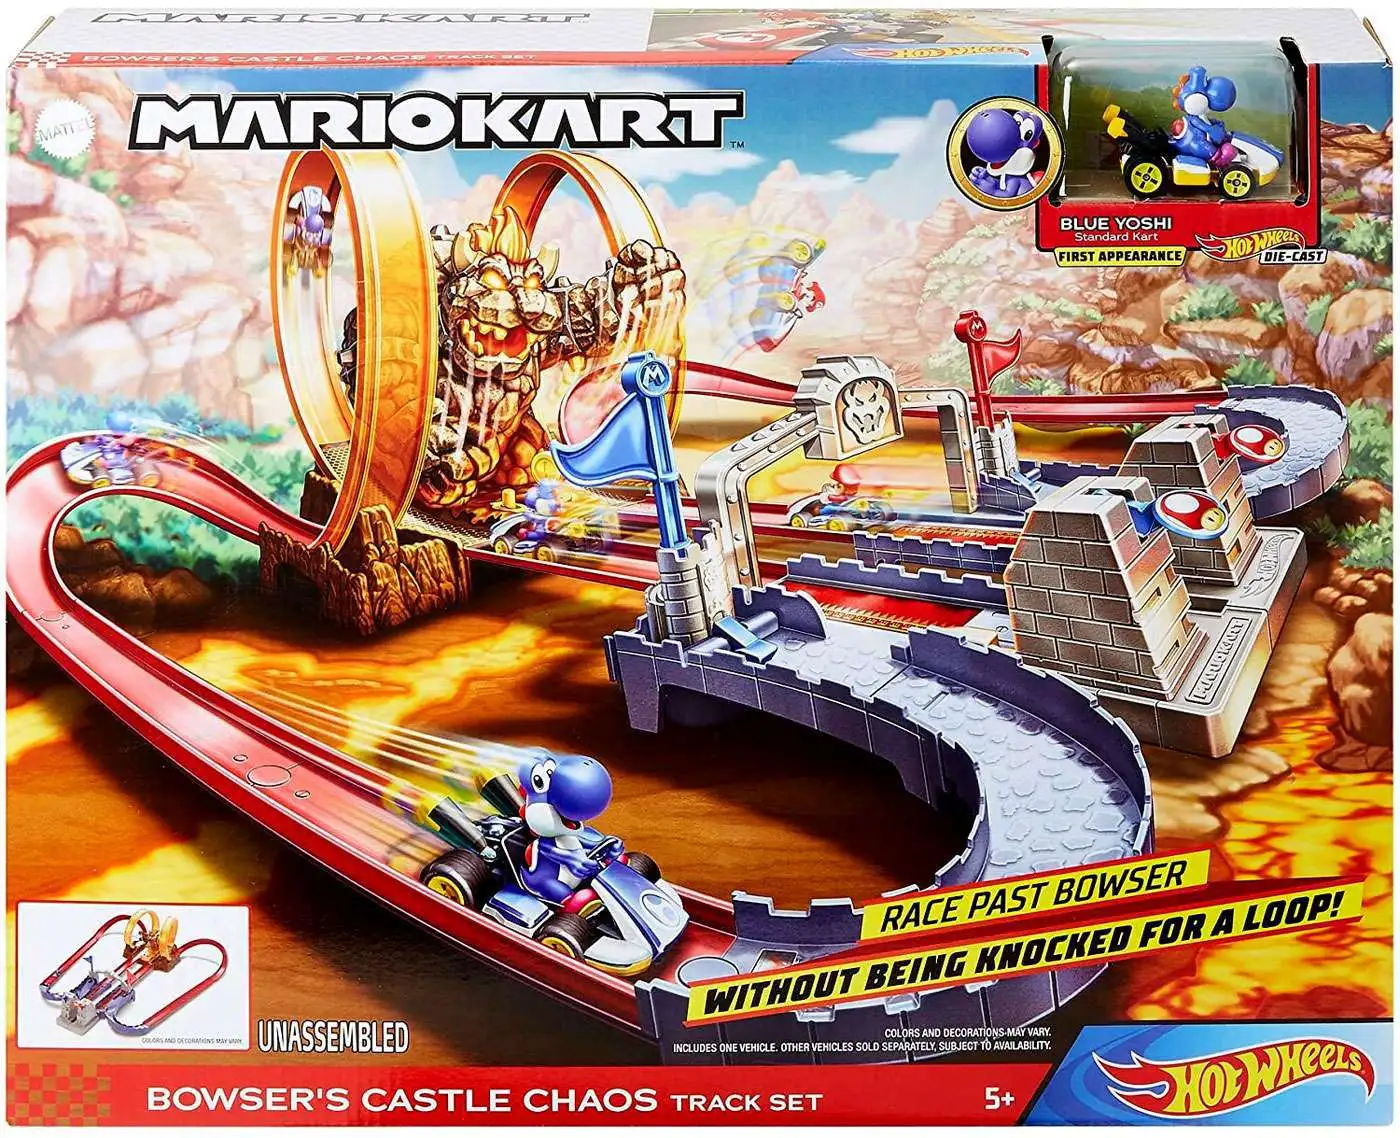 Hot Wheels Mario Kart Bowser's Castle Track Set Play Set Blue Yoshi NEW 2020 